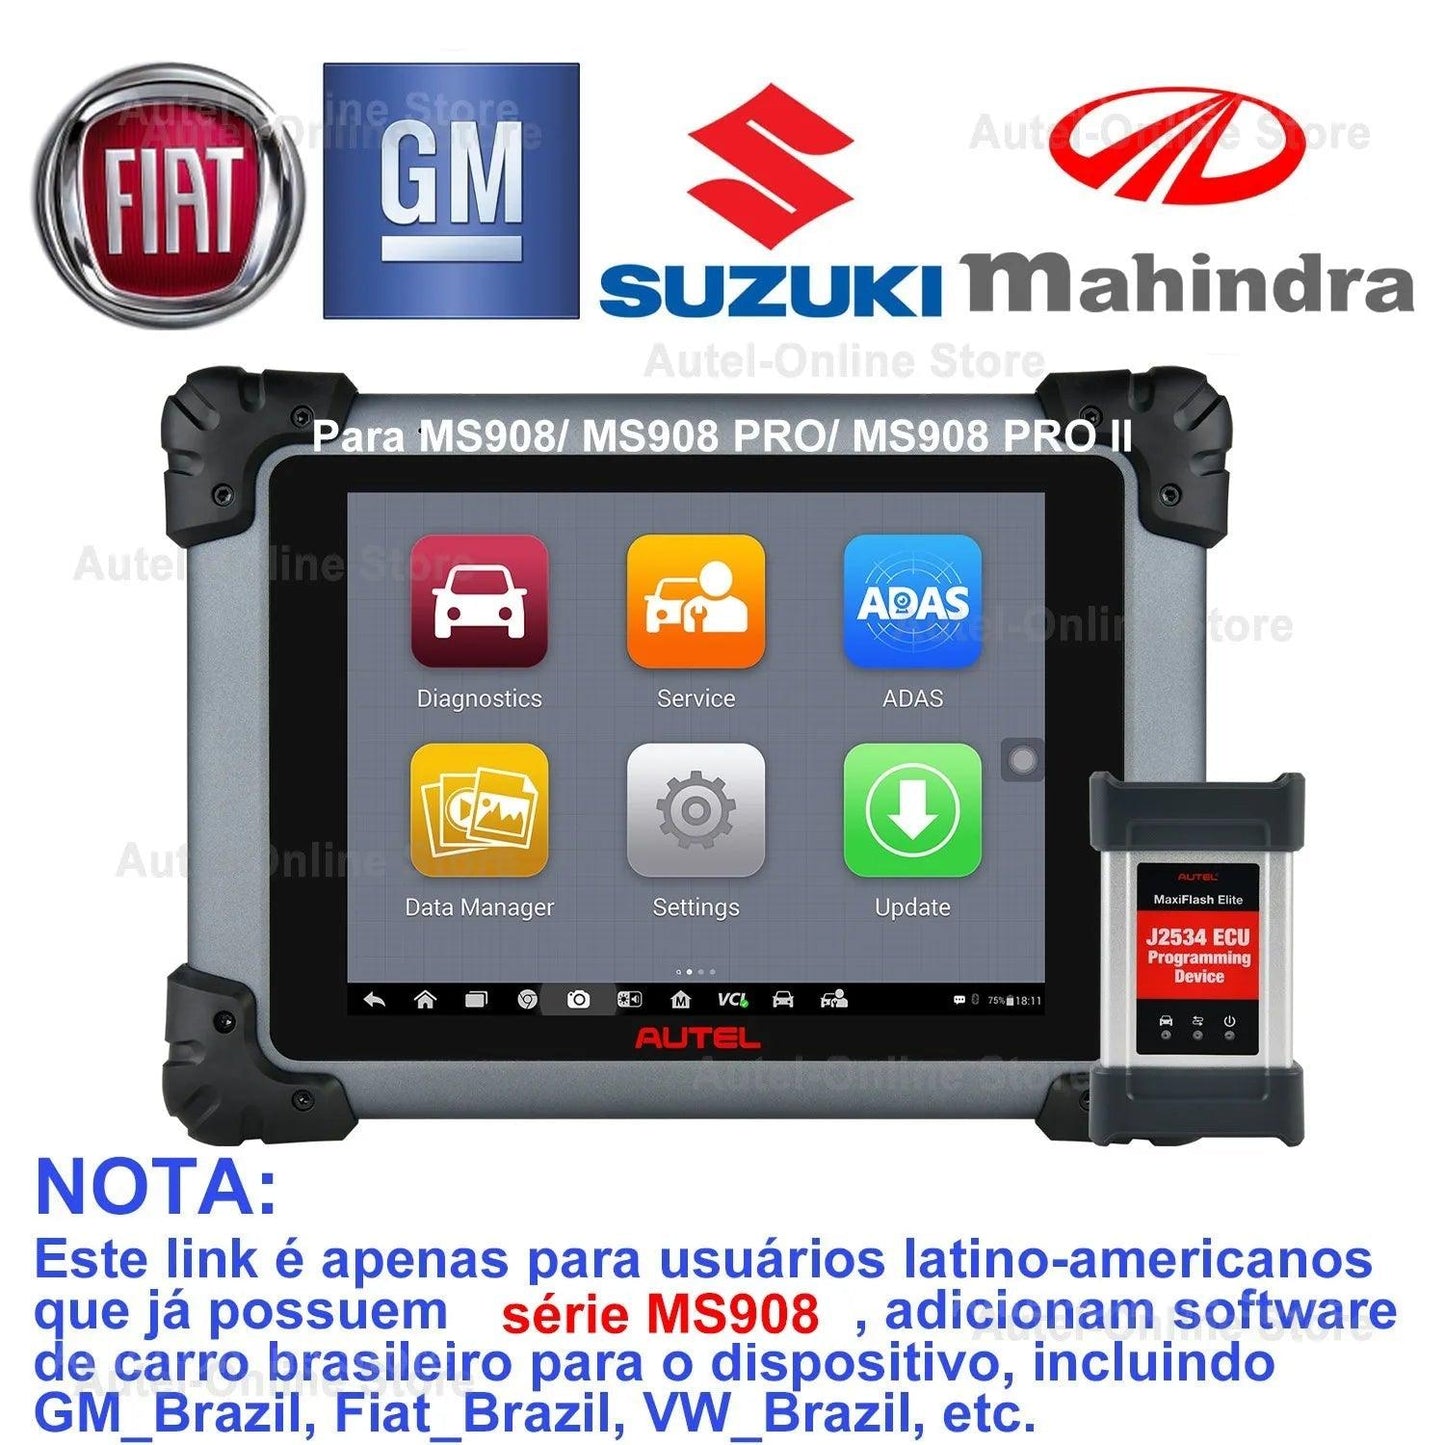 Autel KM100 Brazil Software Upgrade Service, MK808, IM508 Latin American Software, Add Fiat Brazil, GM Brazil, Maruti Suzuki - Dynamex